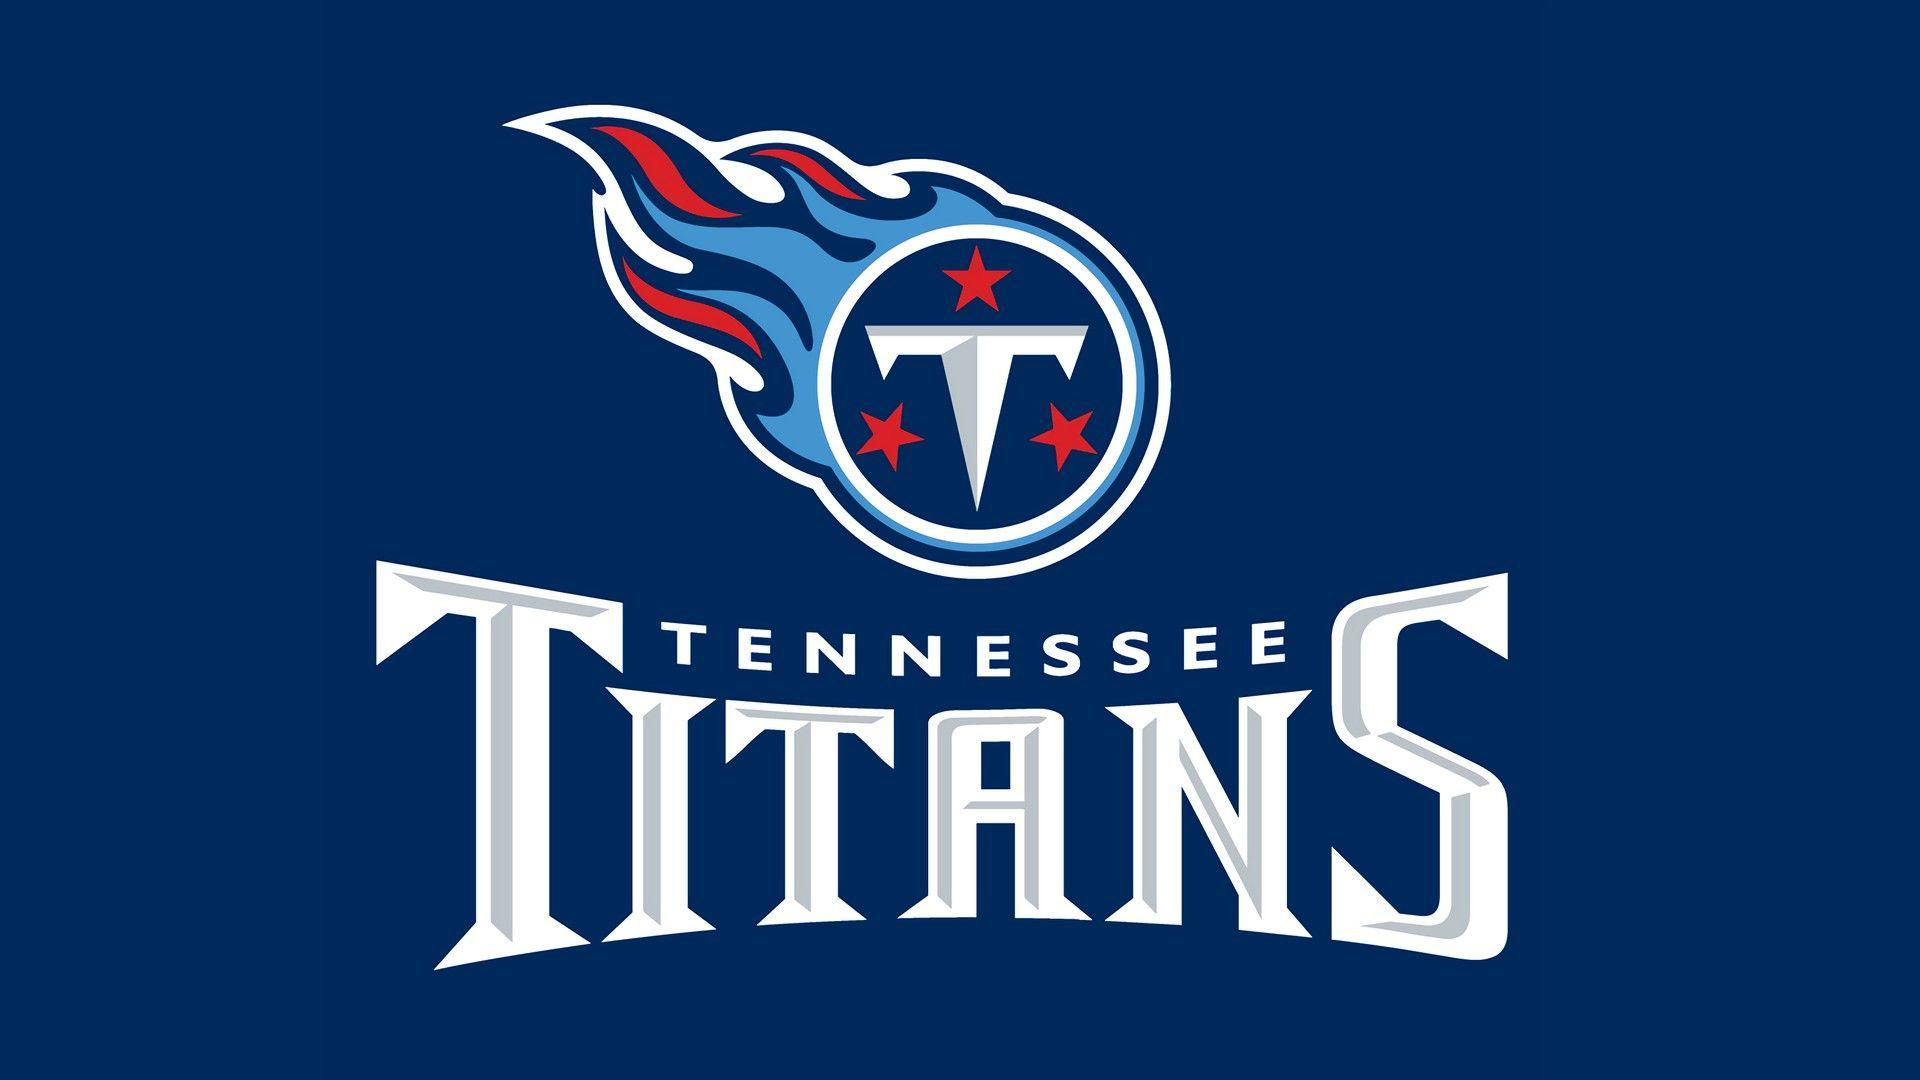 Tennessee Titans Wallpaper HD NFL Football Wallpaper. Tennessee titans football, Titans football, Tennessee titans logo